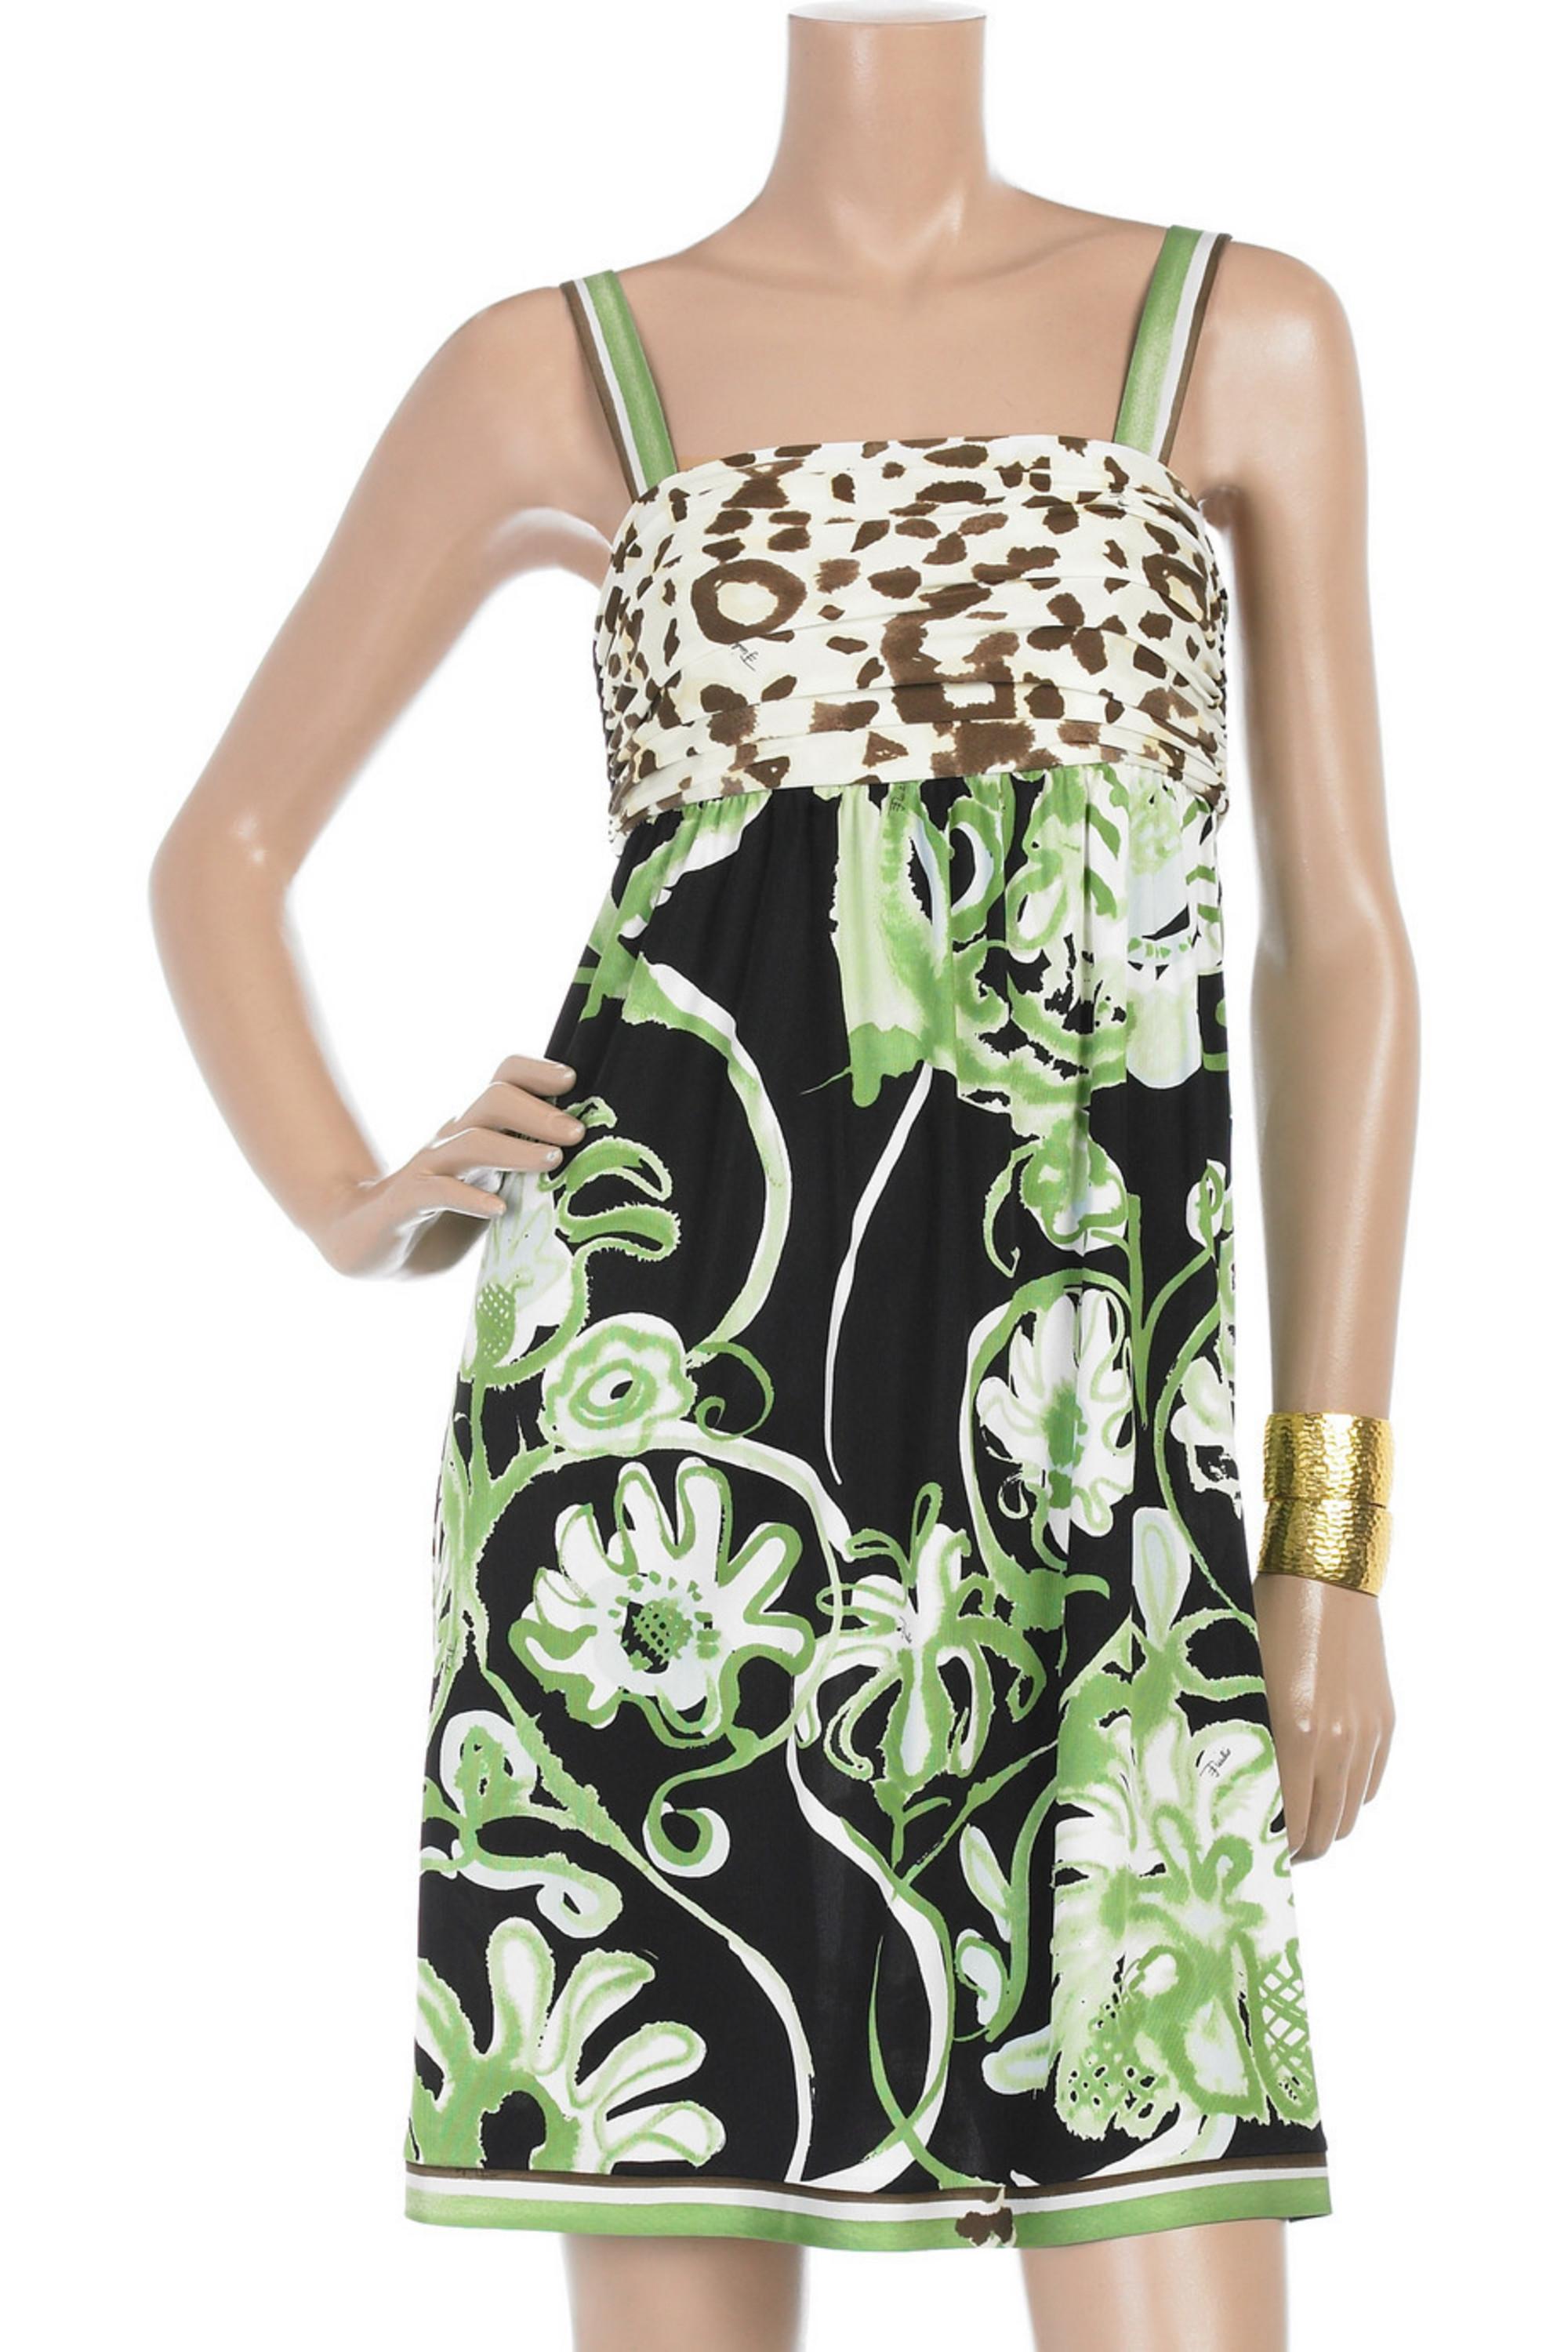 Emilio Pucci Silk Jersey Jungle Cheetah Animal Floral Botanical Print Dress 4